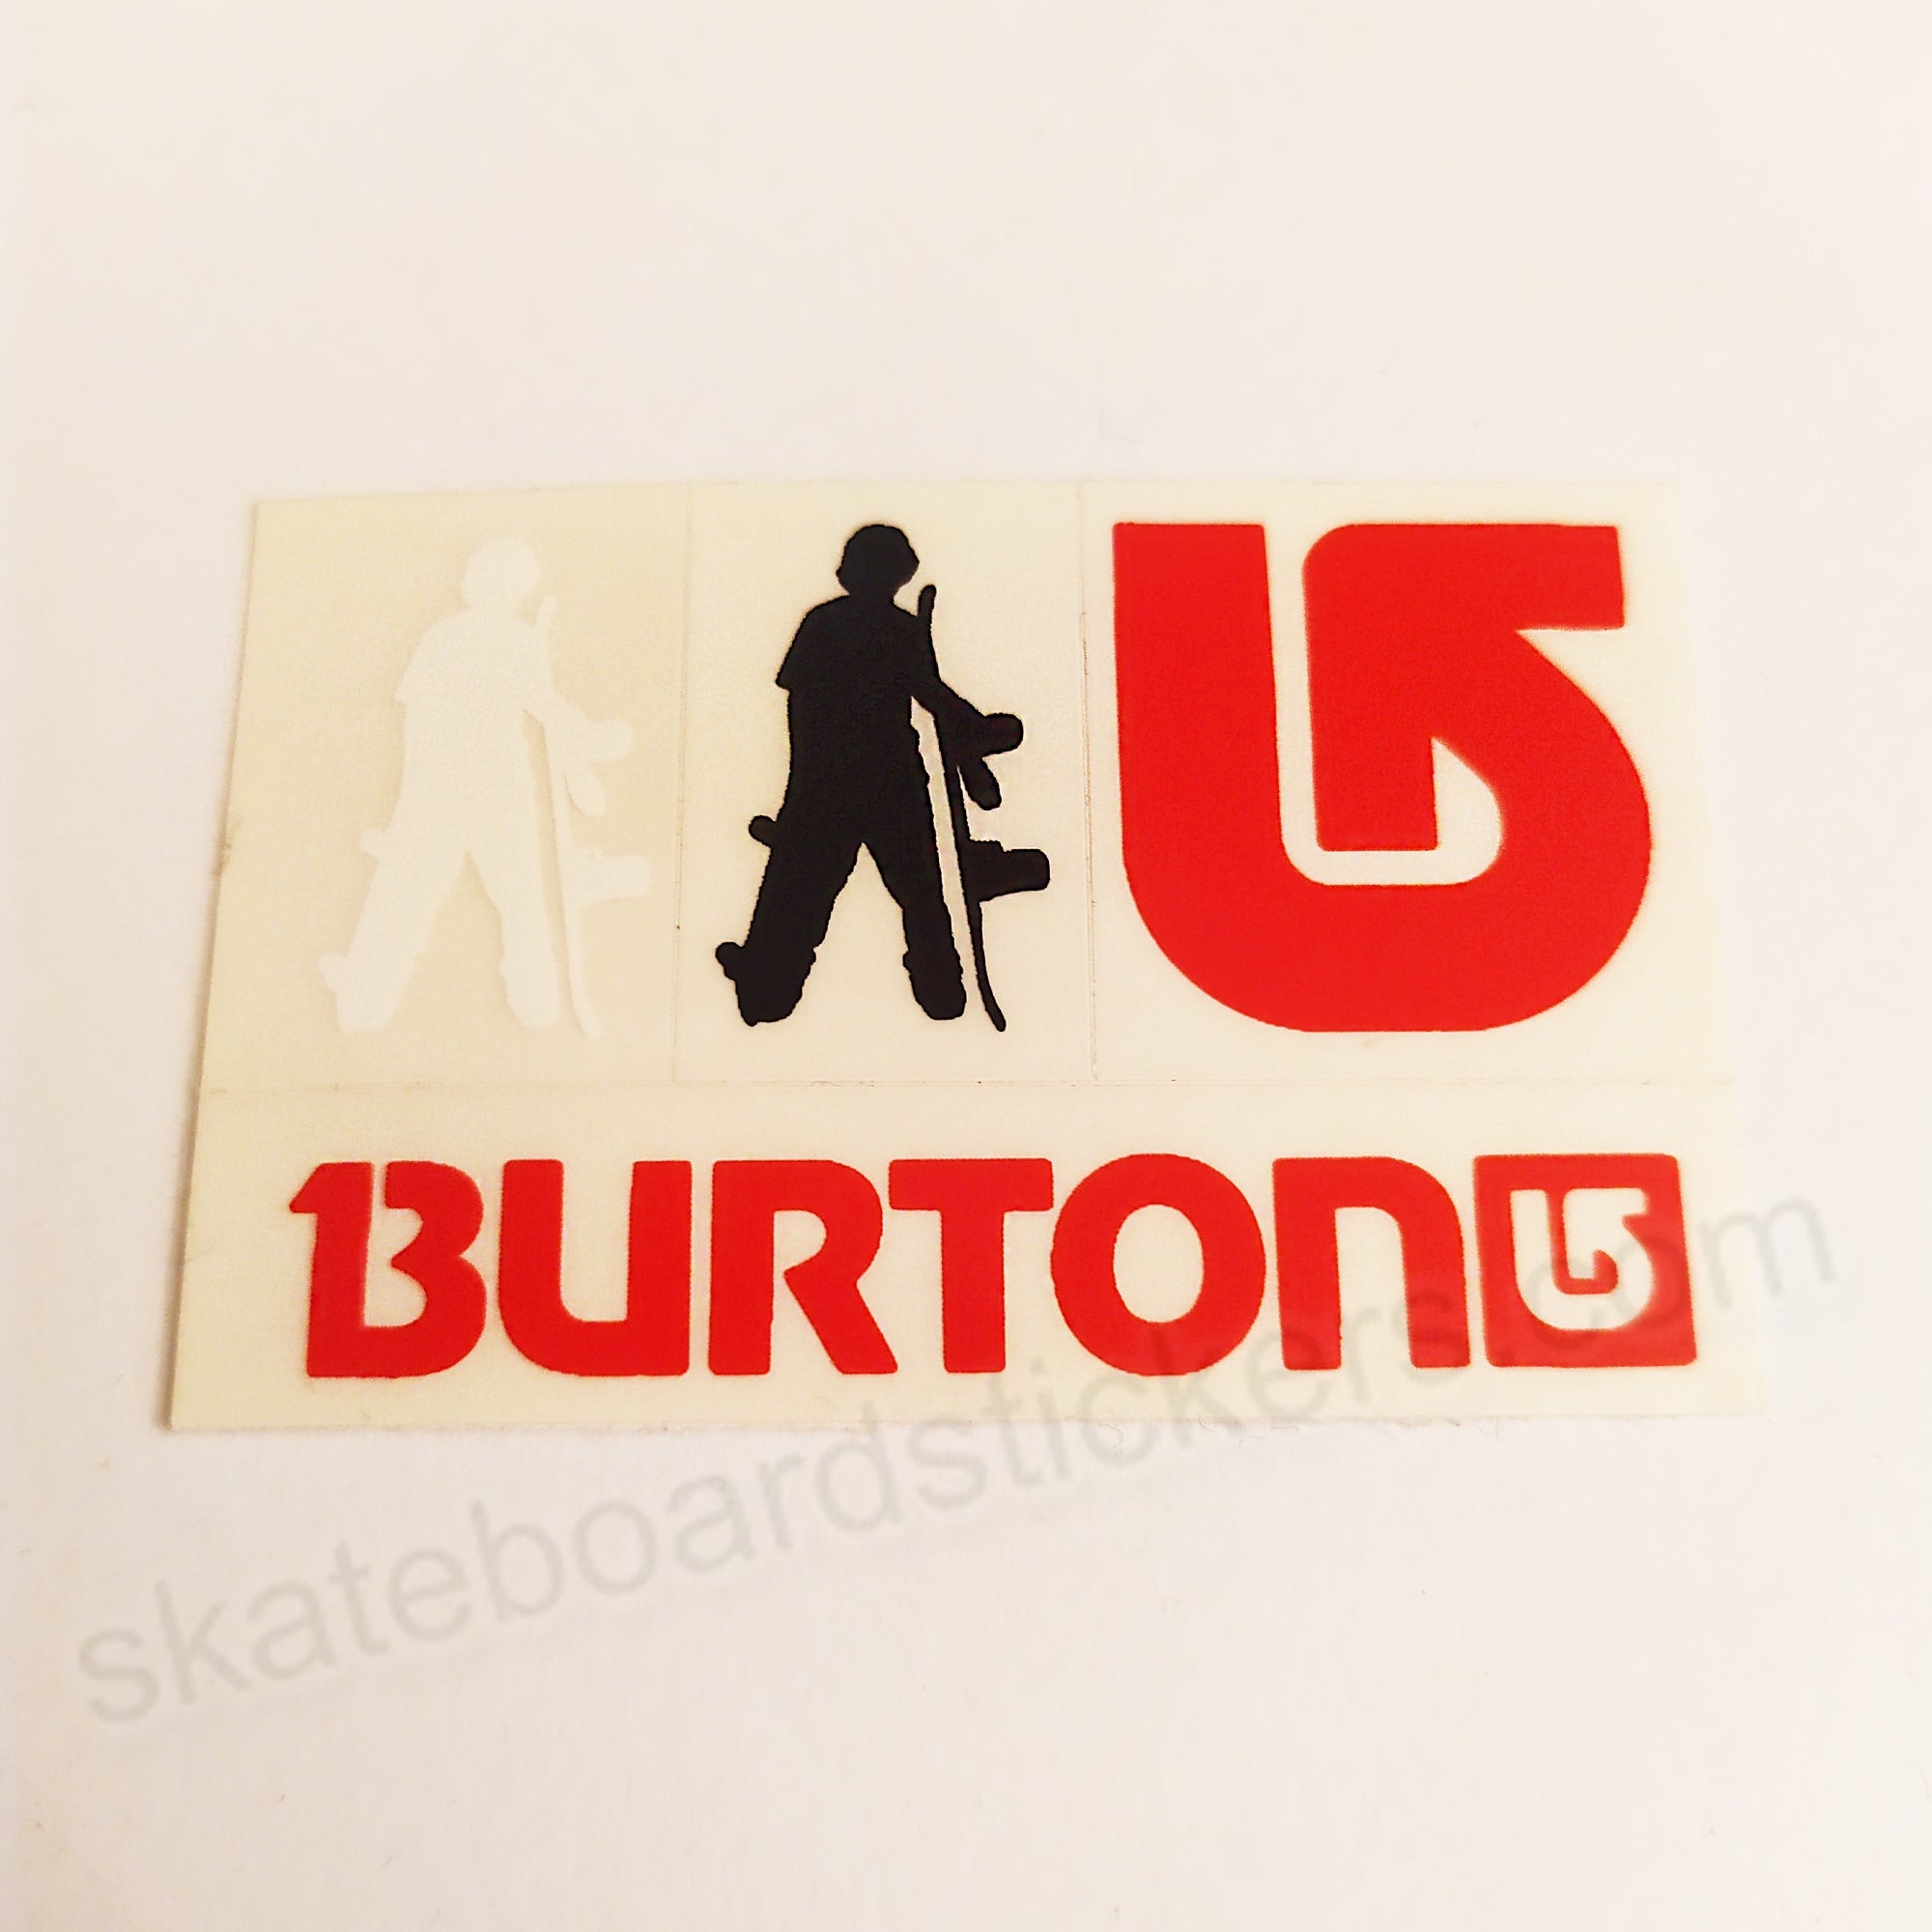 Burton Snowboards Sticker Sheet - small - SkateboardStickers.com